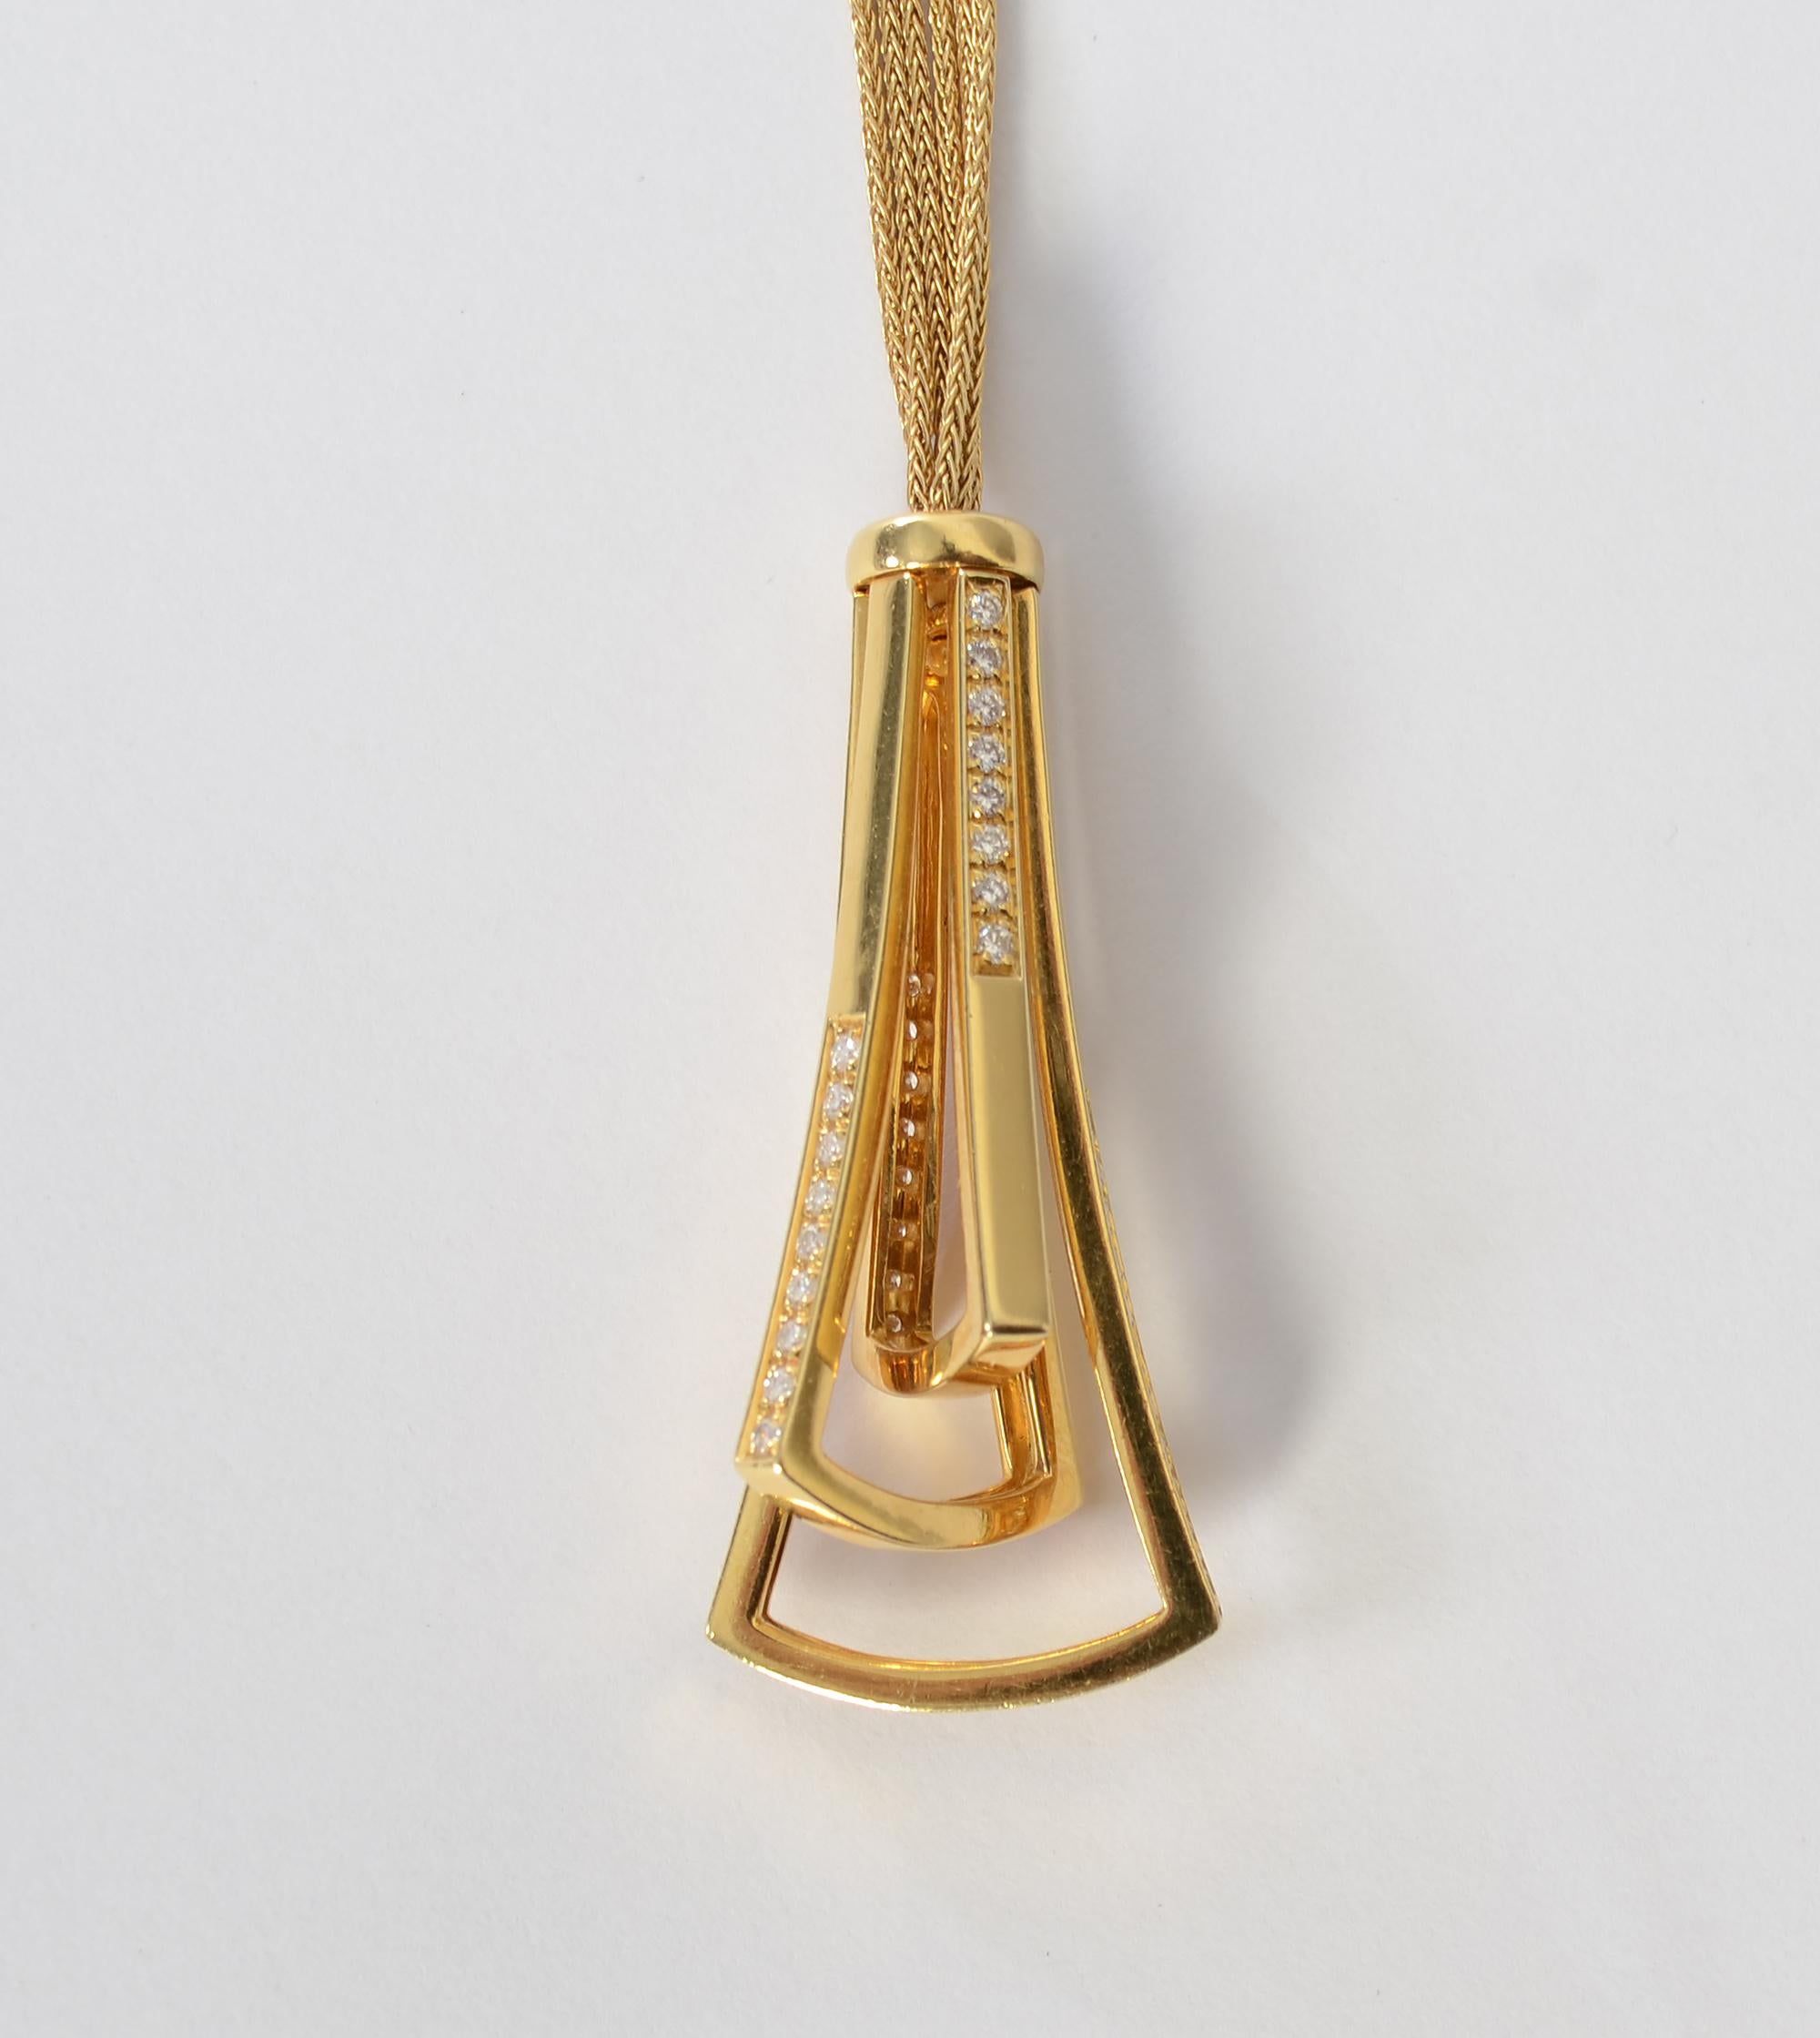 Brilliant Cut Gold Diamond Pendant Necklace on Long Chain For Sale